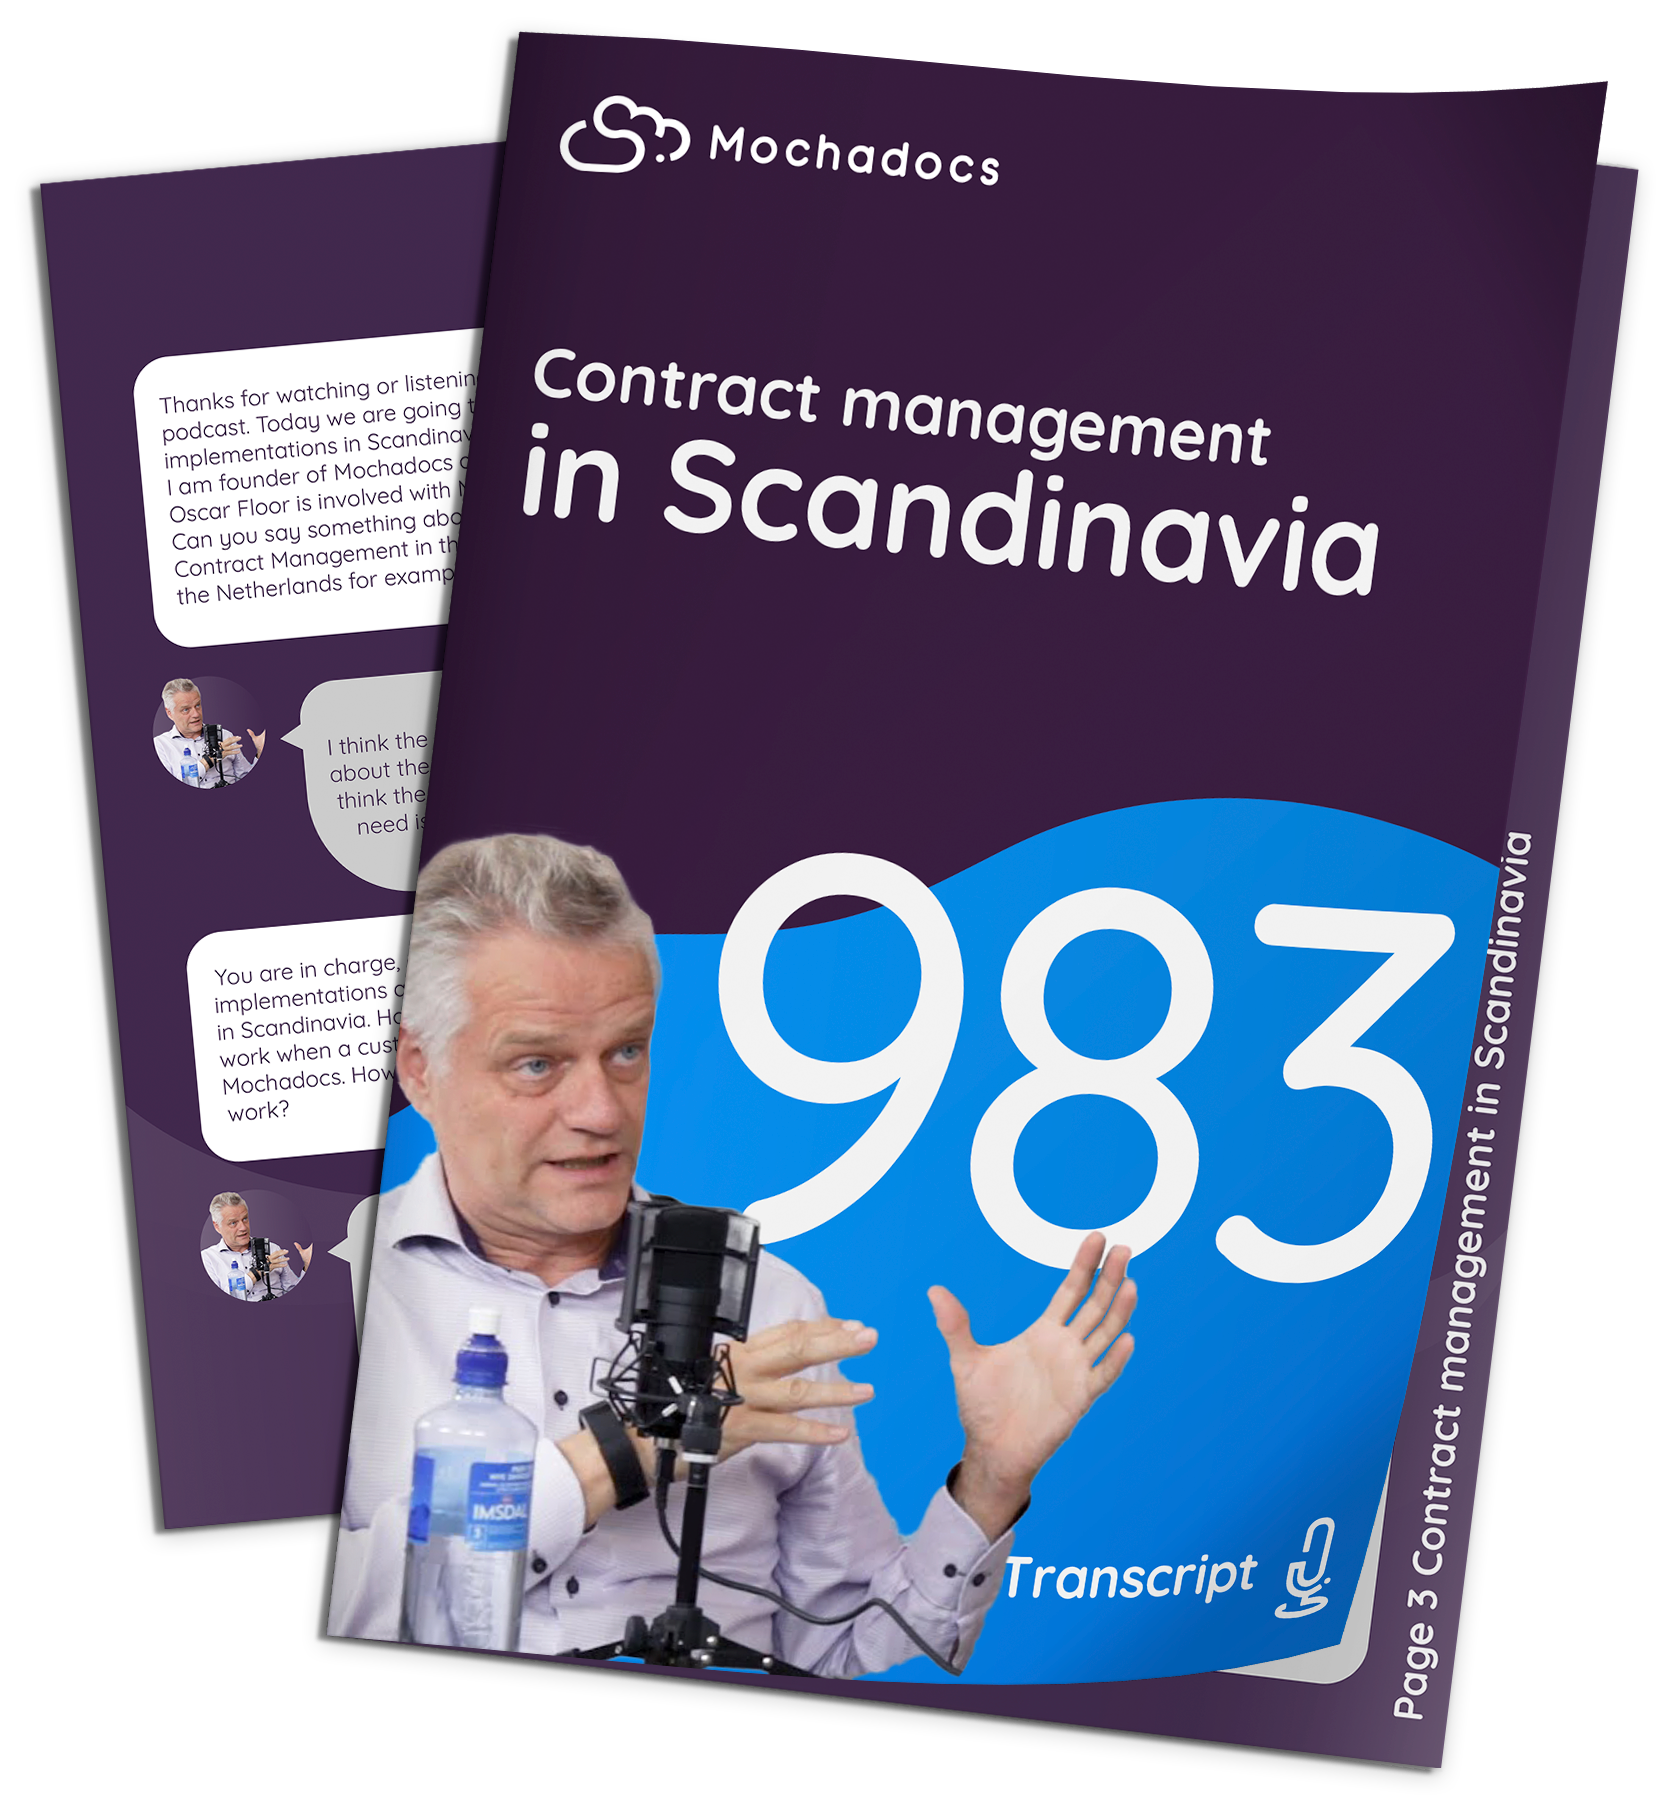 Mochadocs - Contract Management - Transcript - Contract Management in Scandinavia